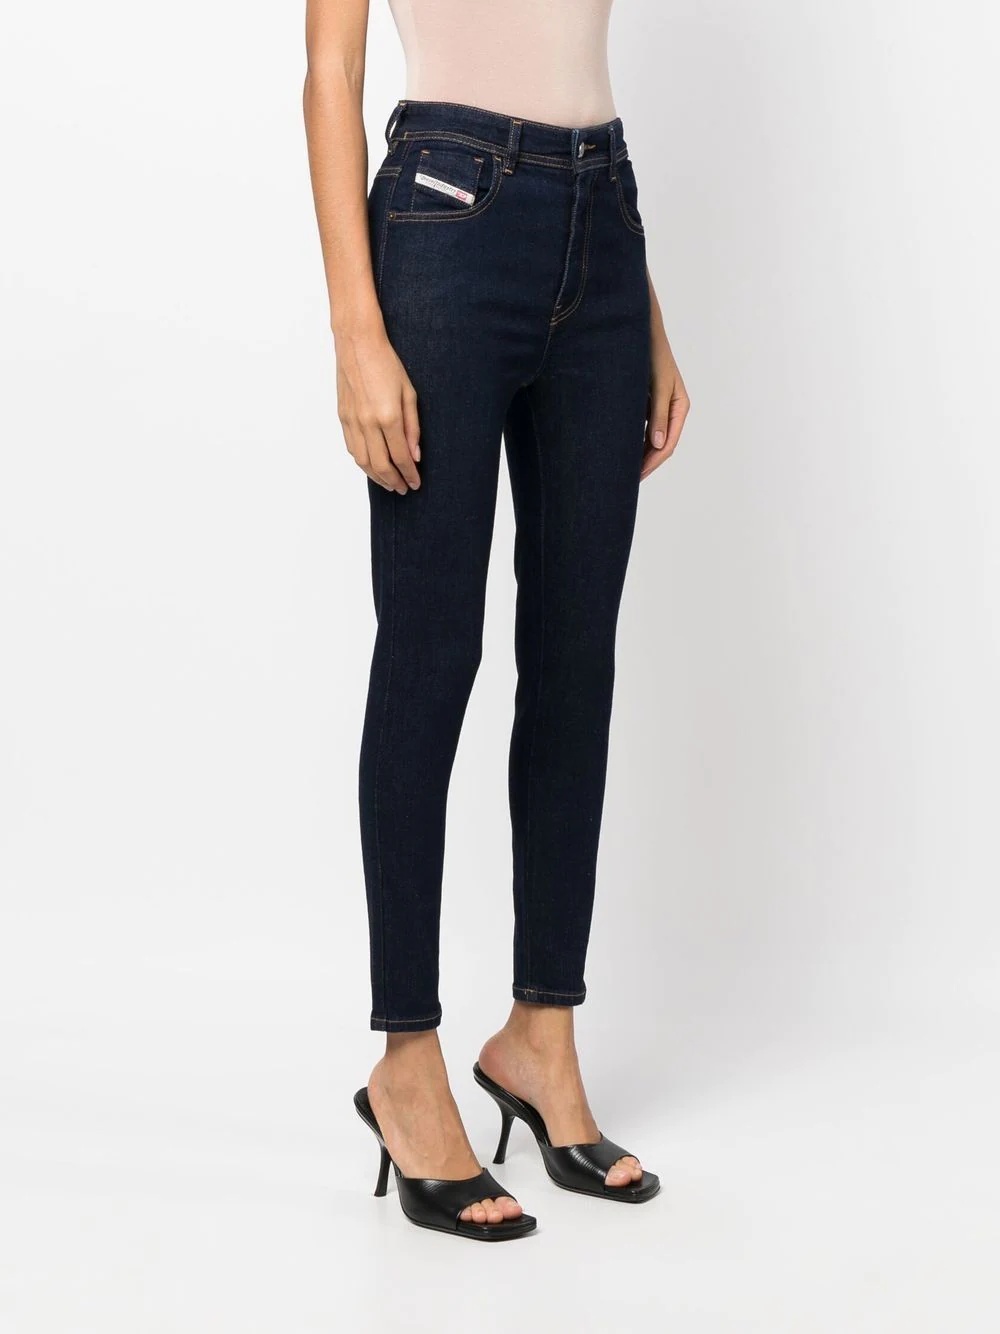 Slandy skinny jeans - 3